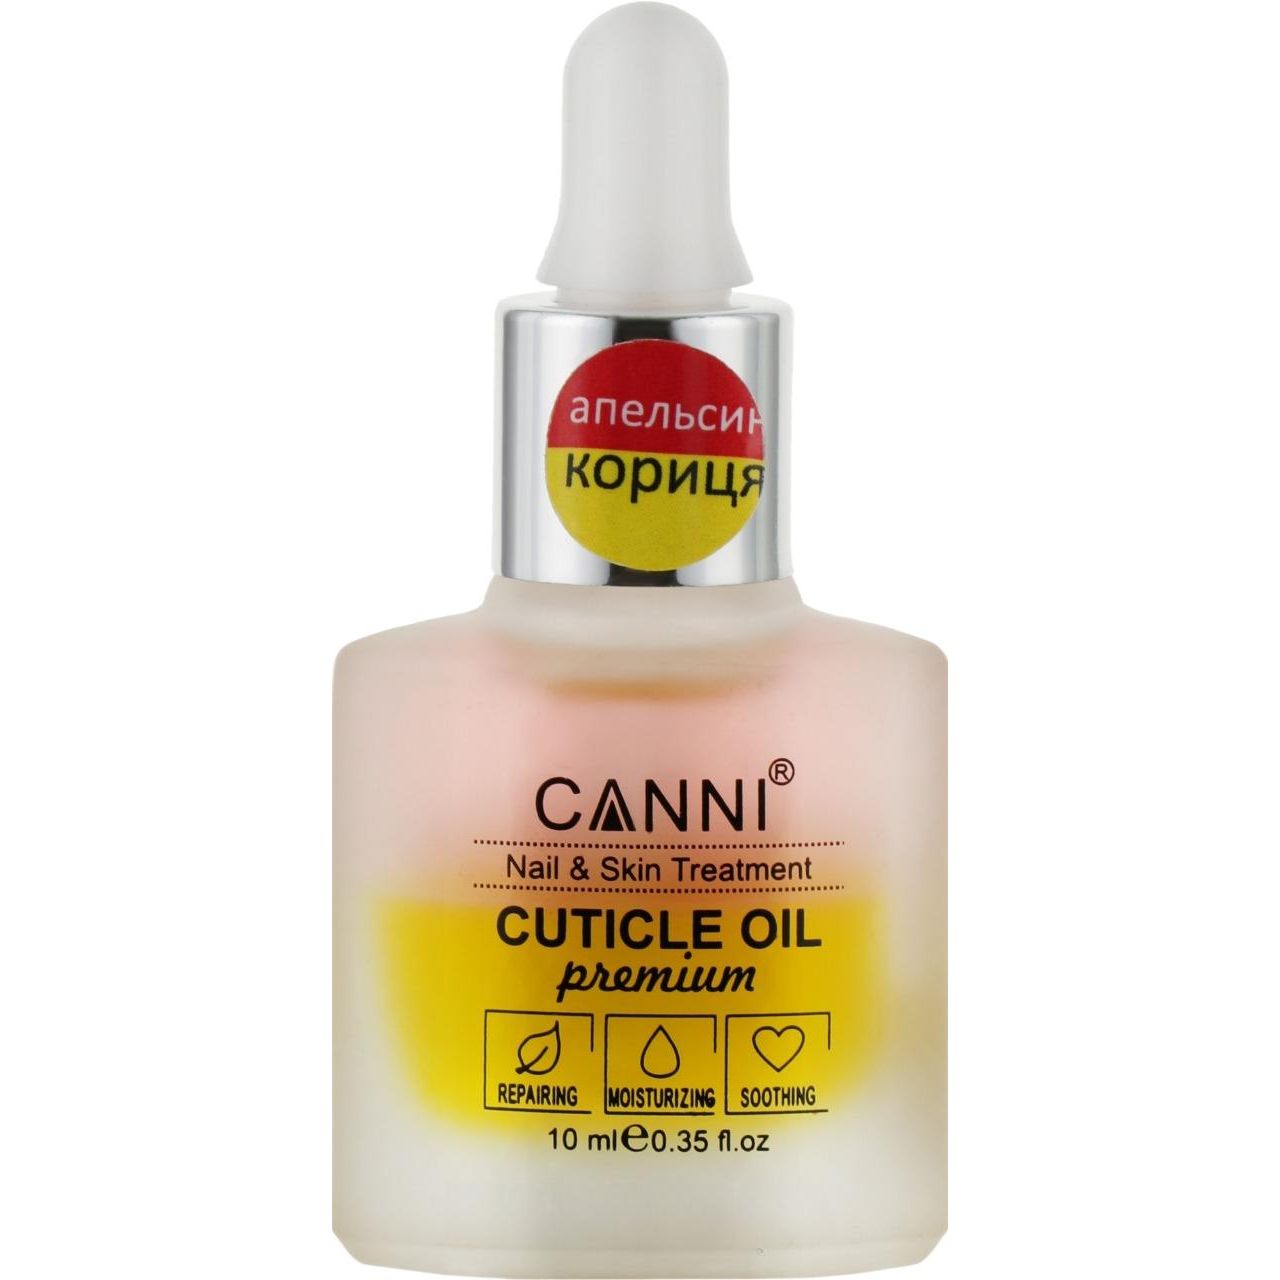 Олійка для кутикули Canni Premium Cuticle Oil двофазна Апельсин-Кориця 10 мл - фото 1